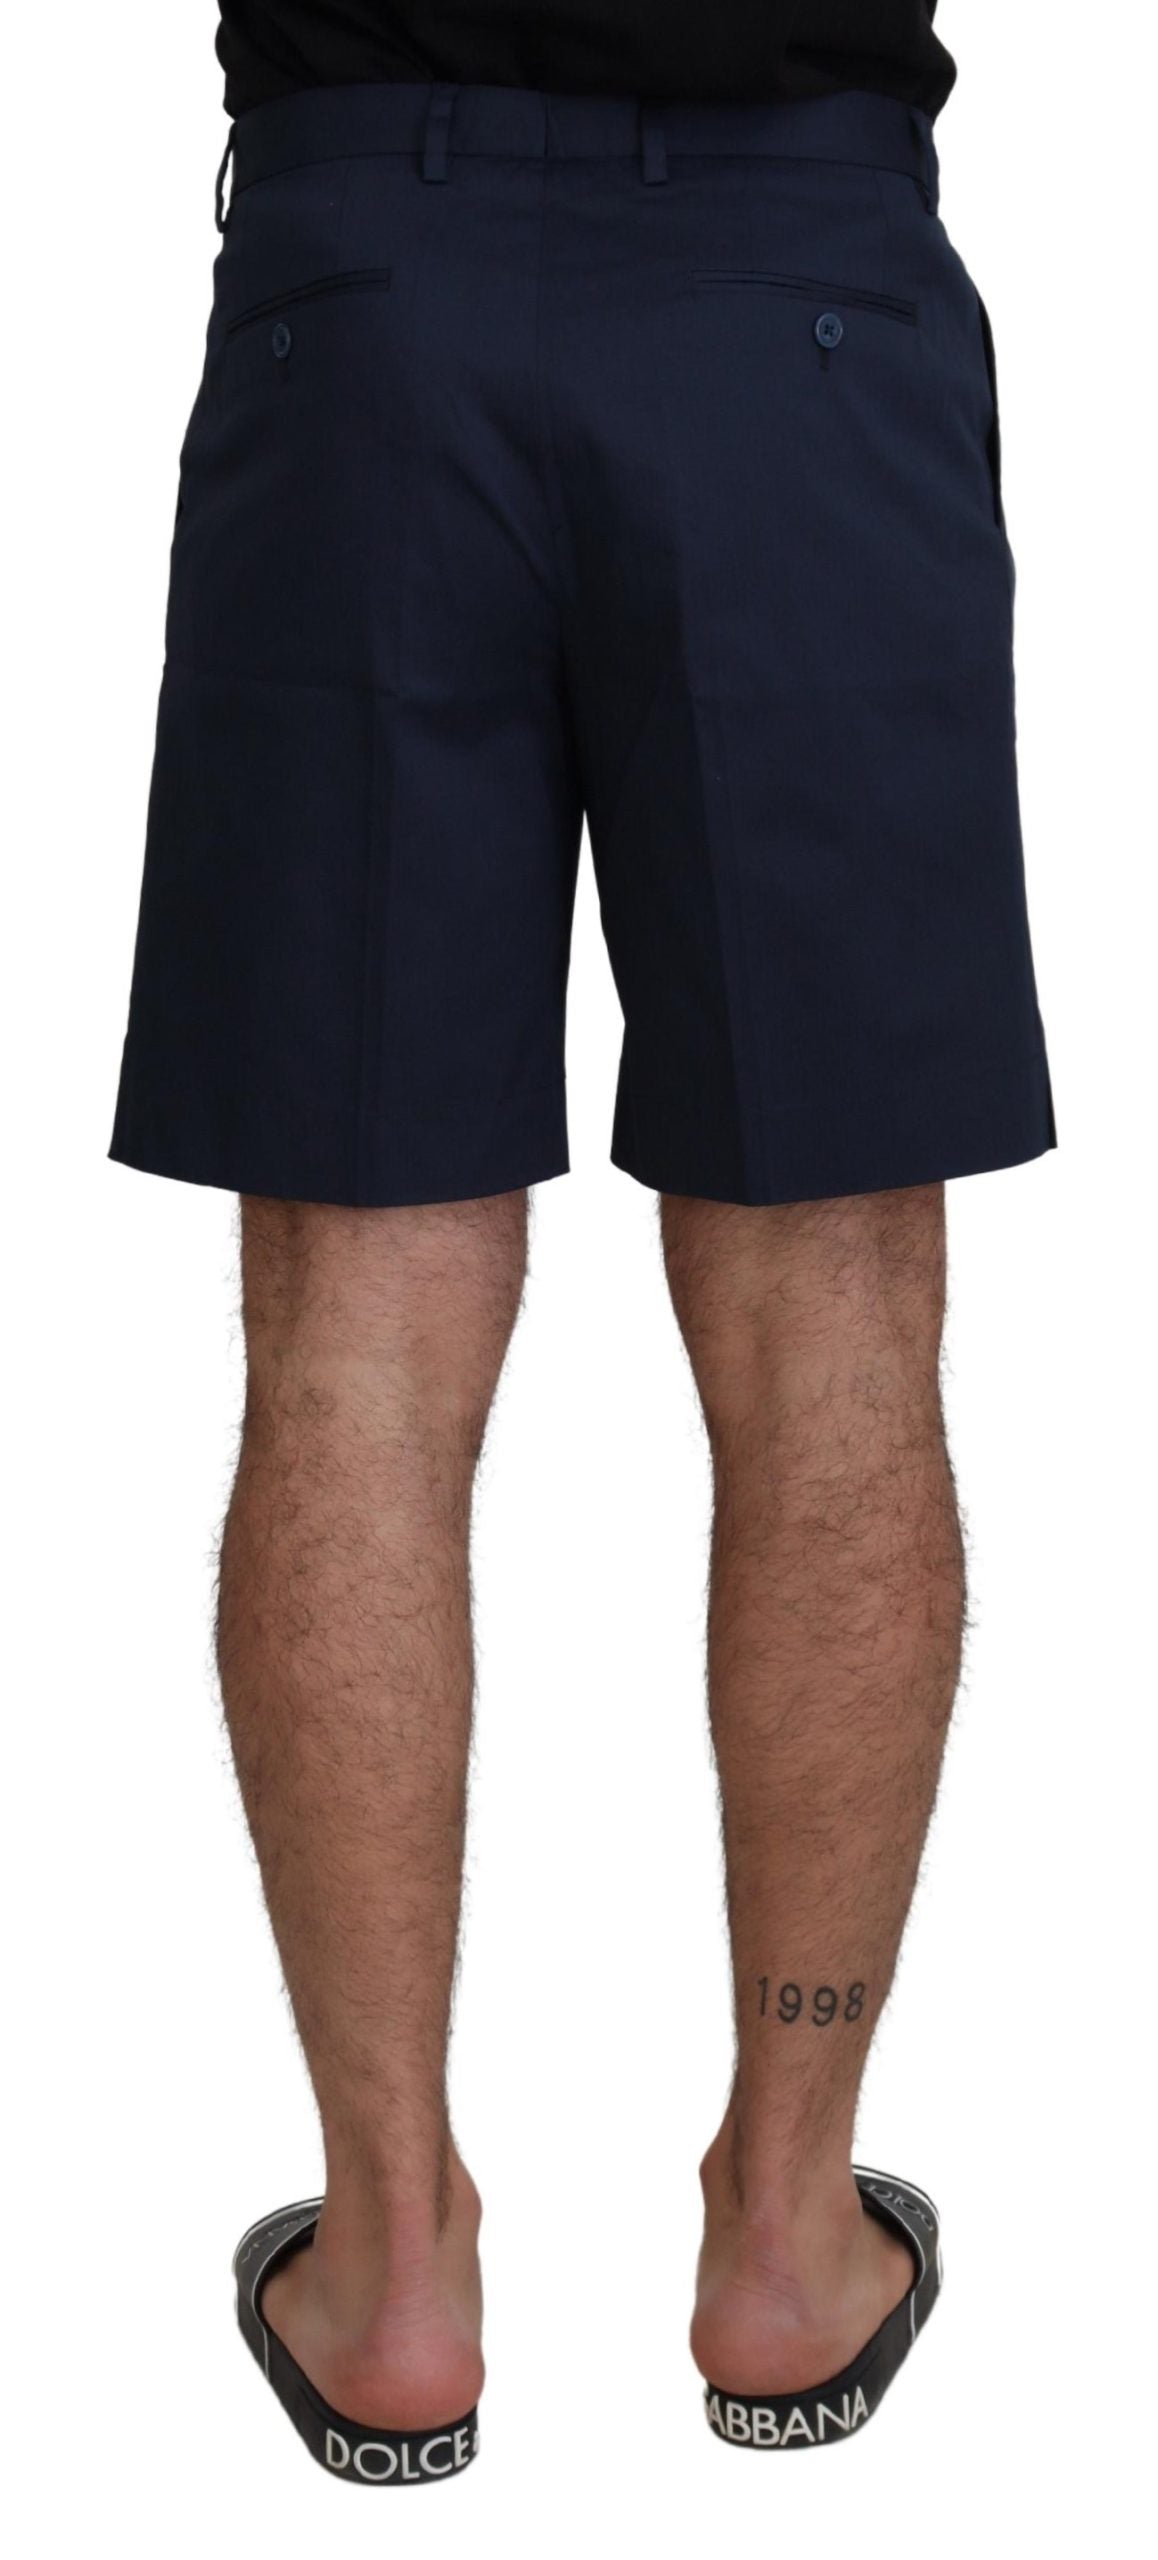 Elegant Blue Chino Shorts